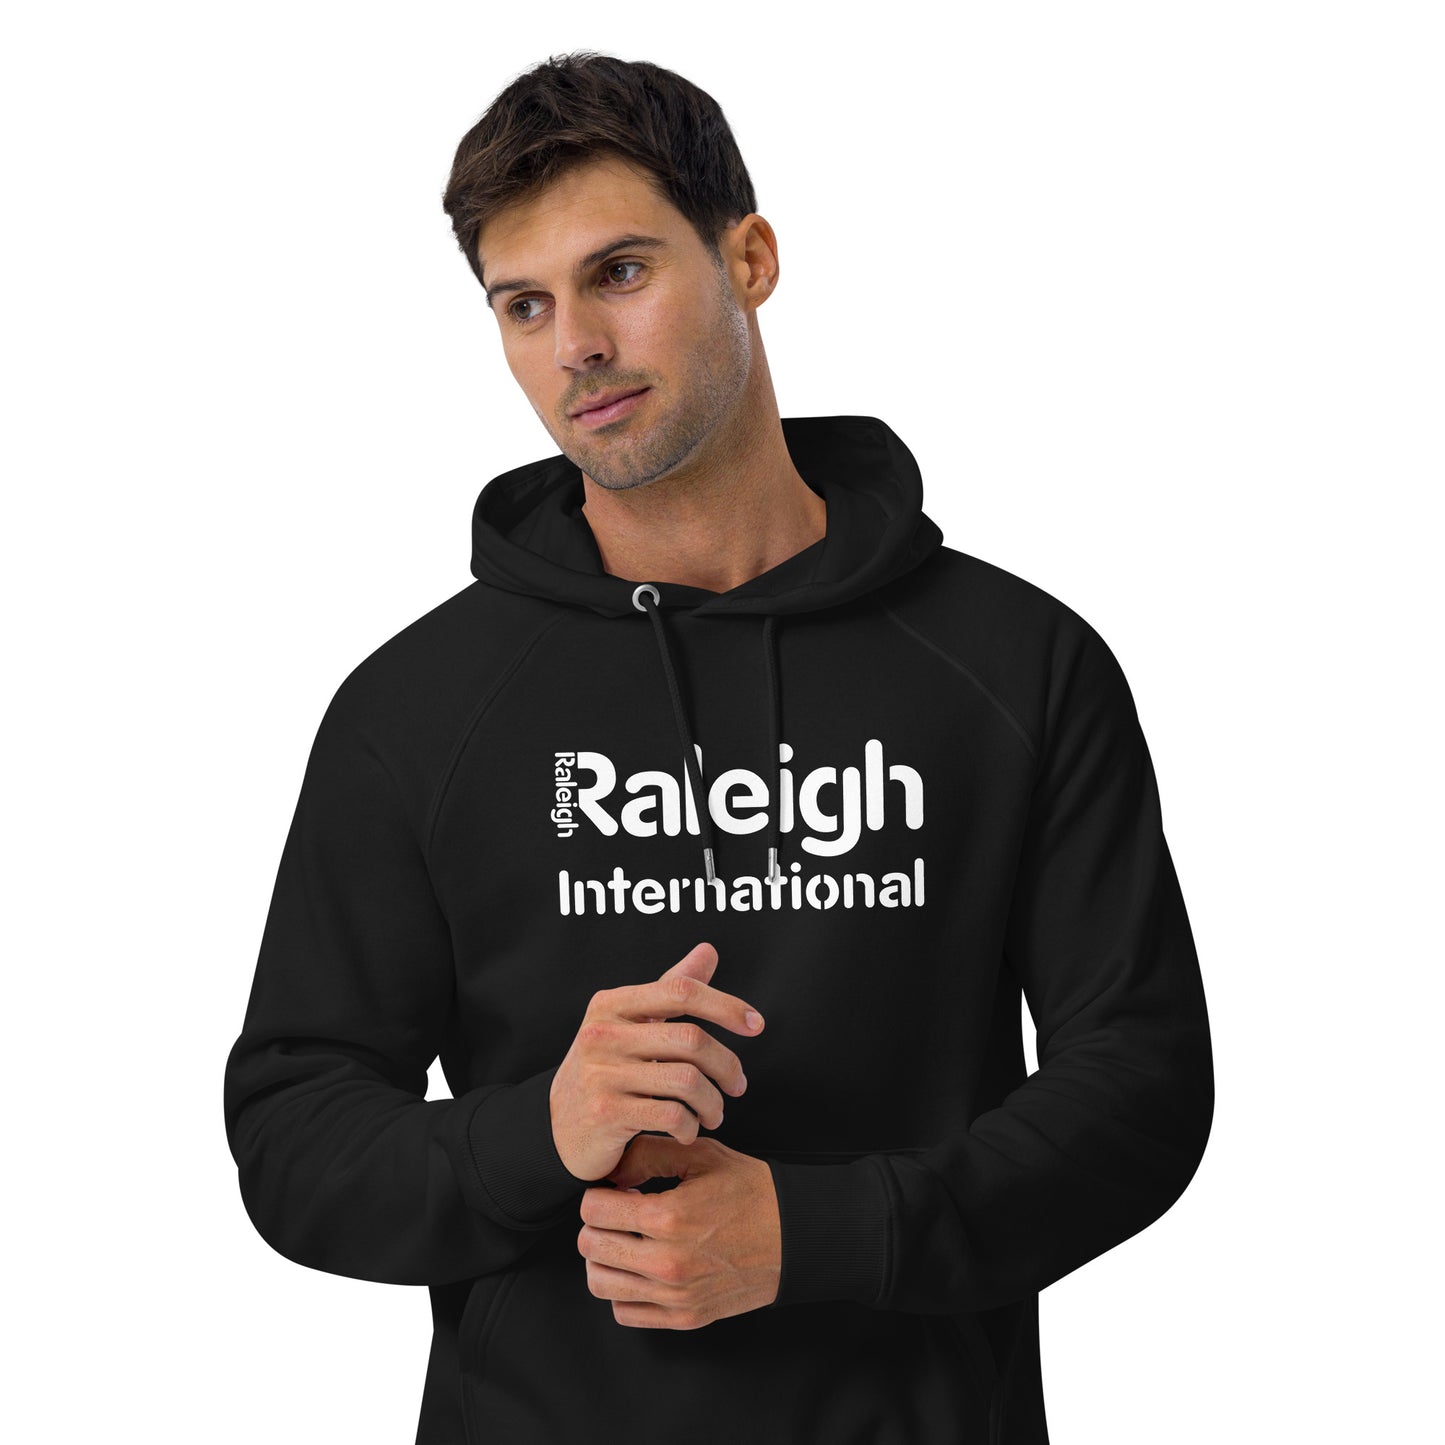 Raleigh Unisex Adventure With Purpose eco hoodie